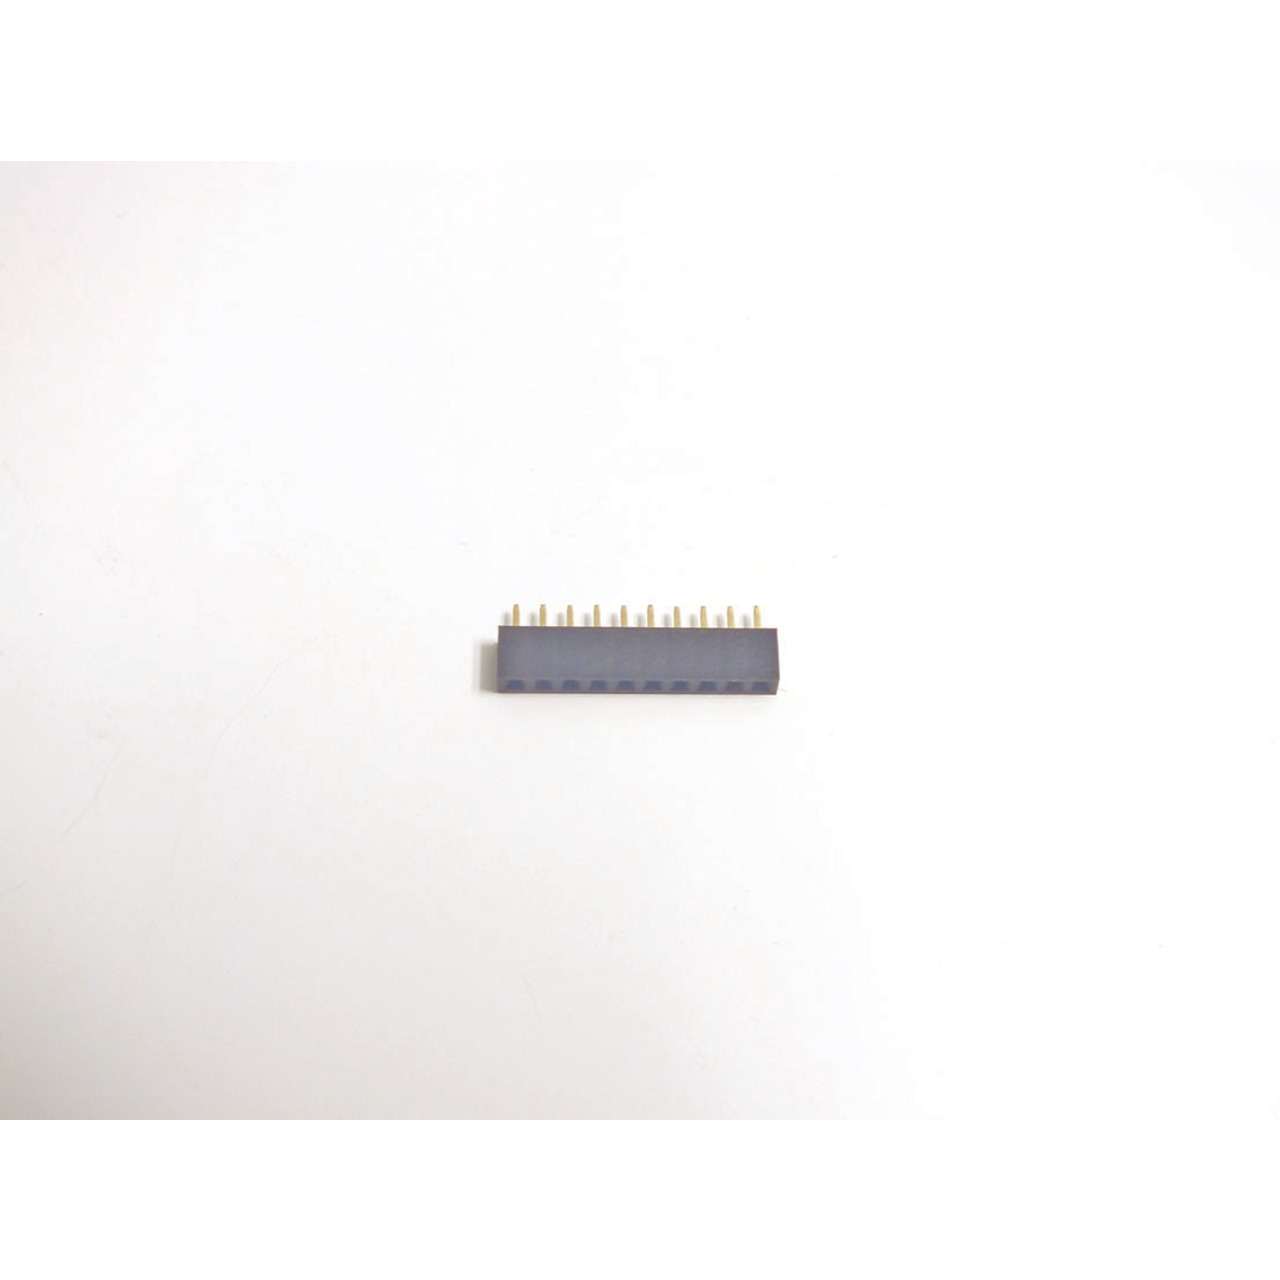 SMD-Buchsenleiste- 1x 10-polig- Krperhhe 4-3 mm- gerade